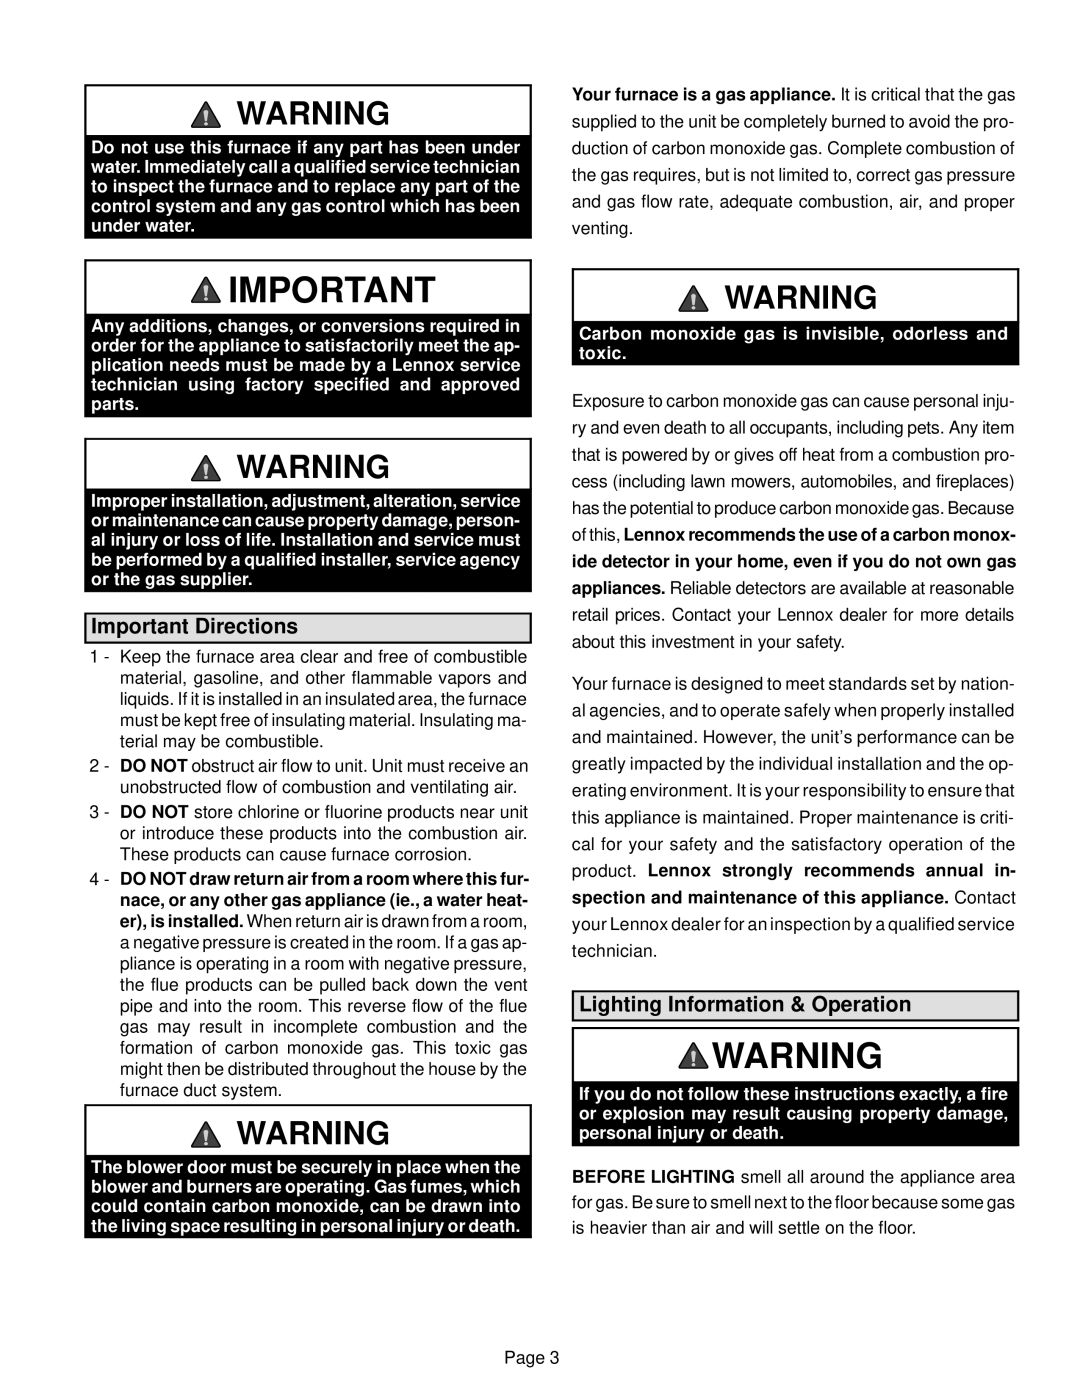 Lennox International Inc G40UH(X) manual Important Directions, Lighting Information & Operation 